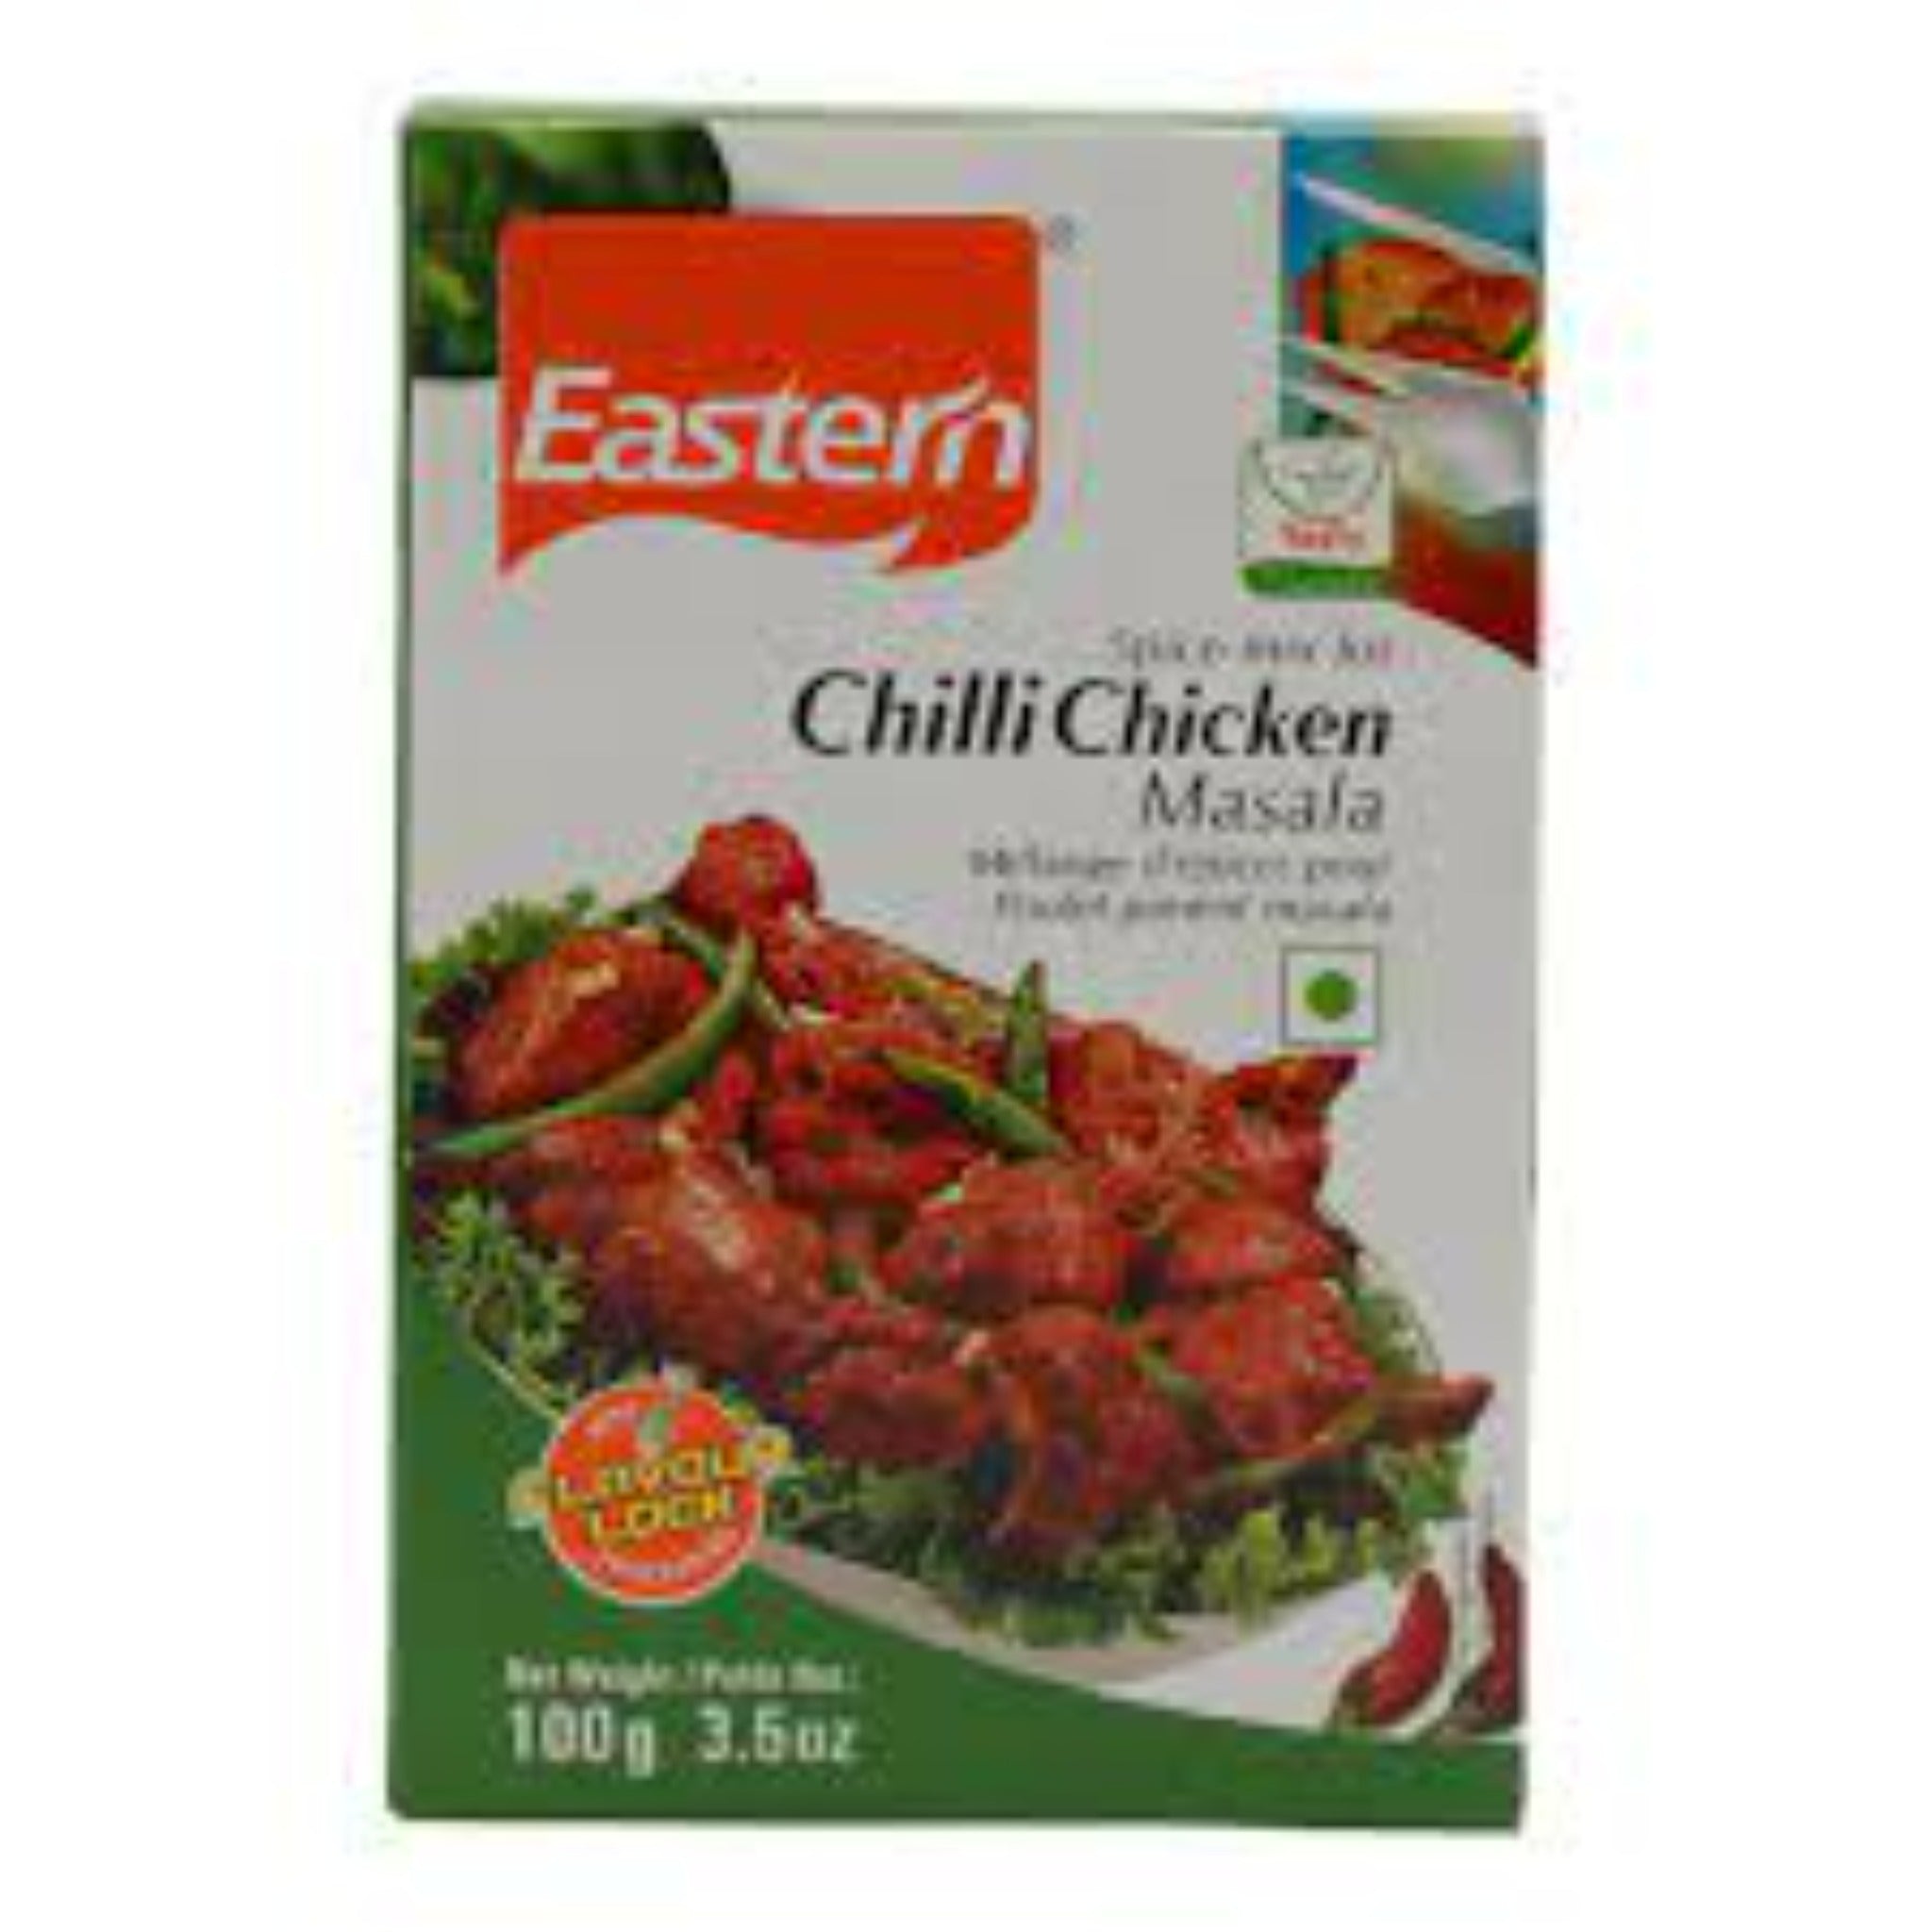 Eastern Chilli Chicken Masala 200g